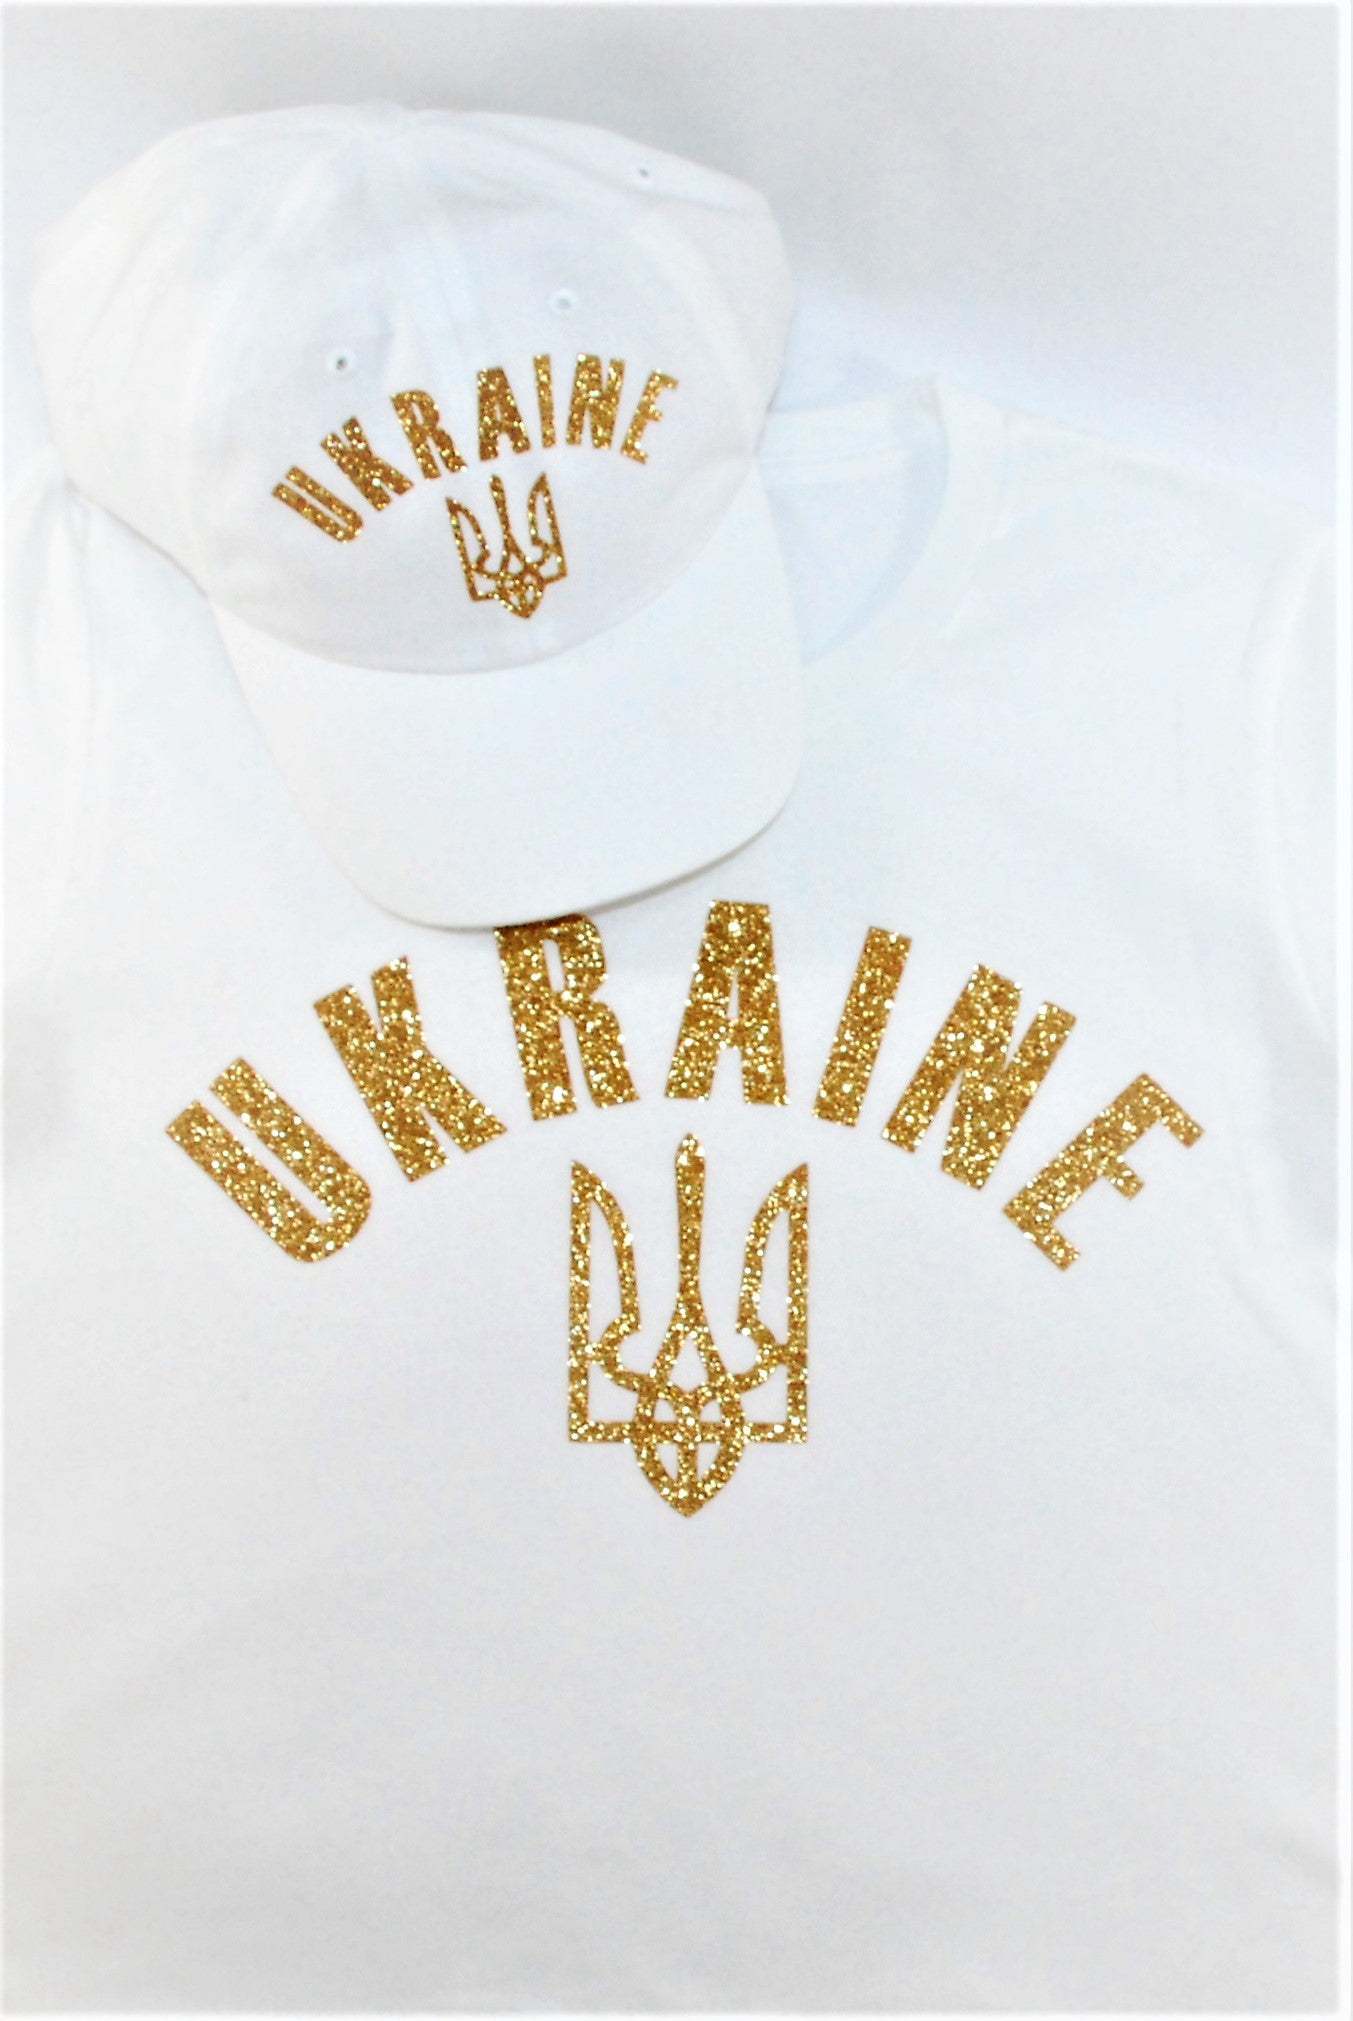 Women's t-shirt "Ukraine" white & gold